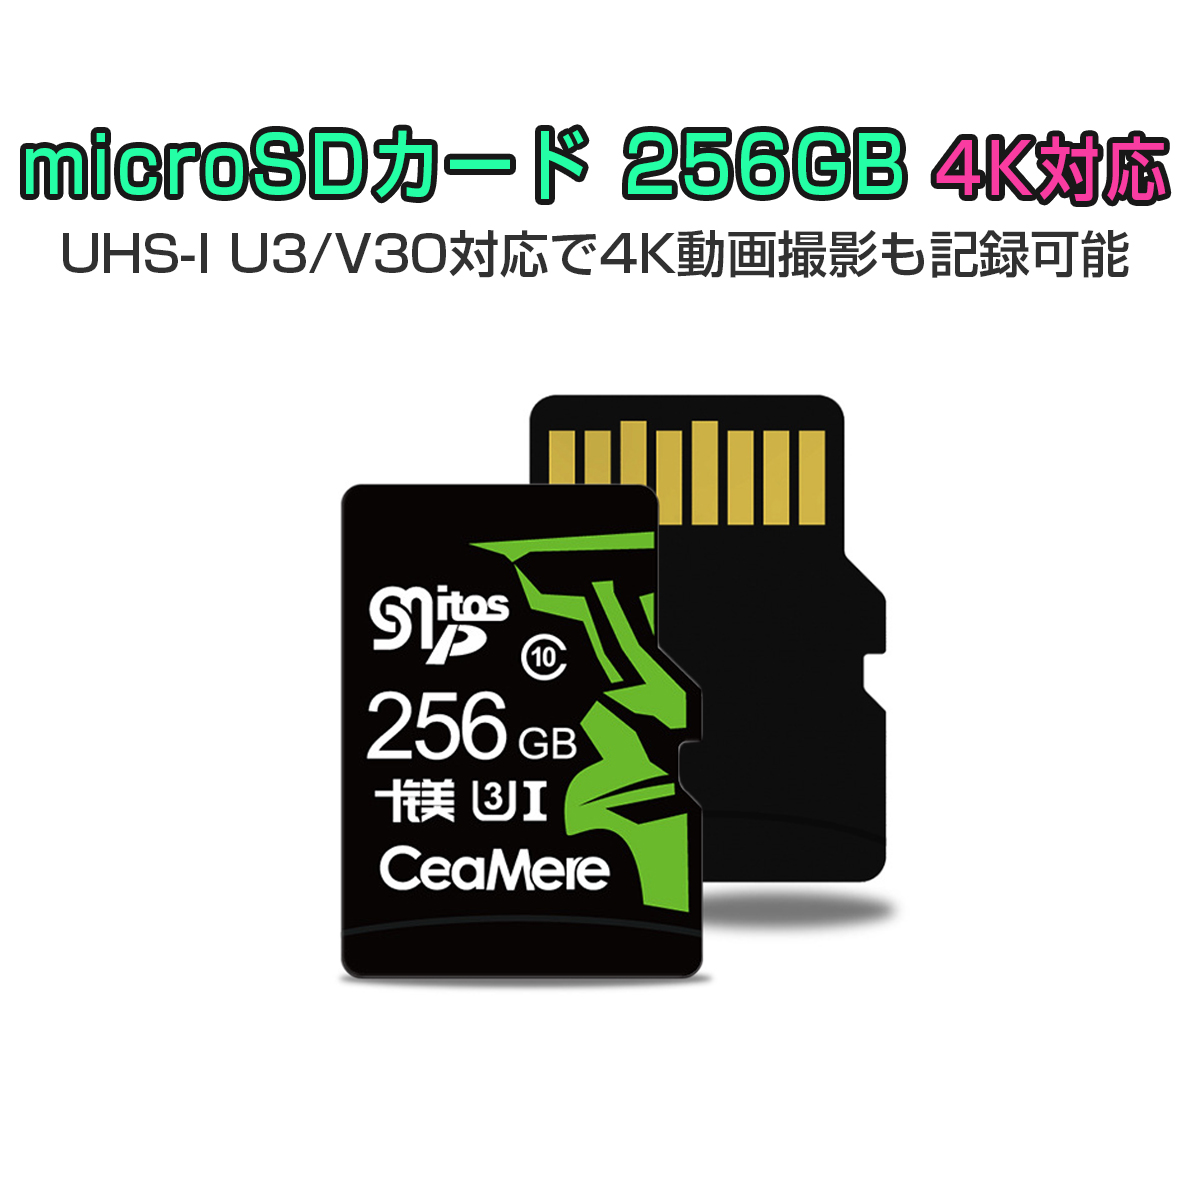 MicroSDカード 256GB UHS-I V30 超高速 最大95MB/sec 3D MLC NAND採用 ASチップ 高耐久 MicroSD マイクロSD microSDXC 300x SDカード変換アダプタ USBカードリーダー付き SDM便送料無料 1年保証